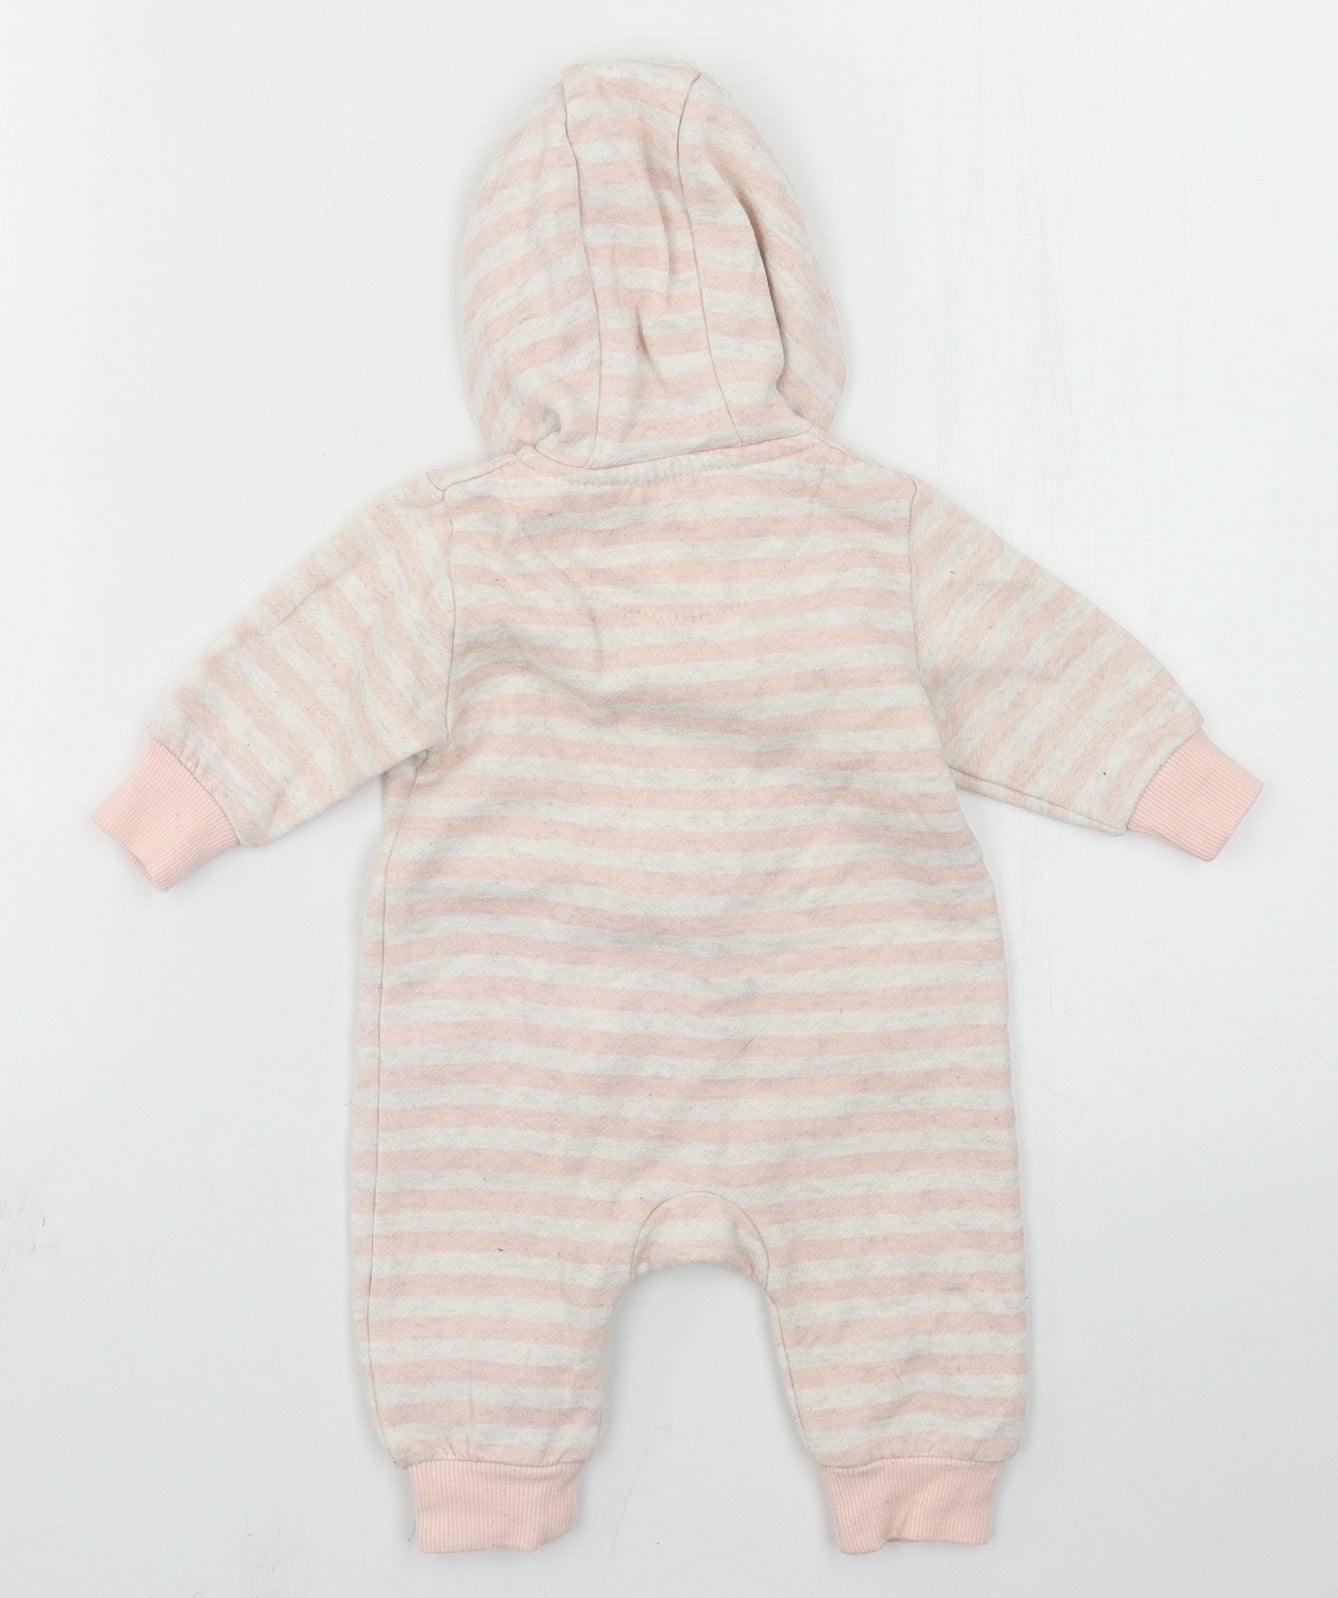 Earlydays Girls Pink Striped Jersey Babygrow One-Piece Size 0-3 Months